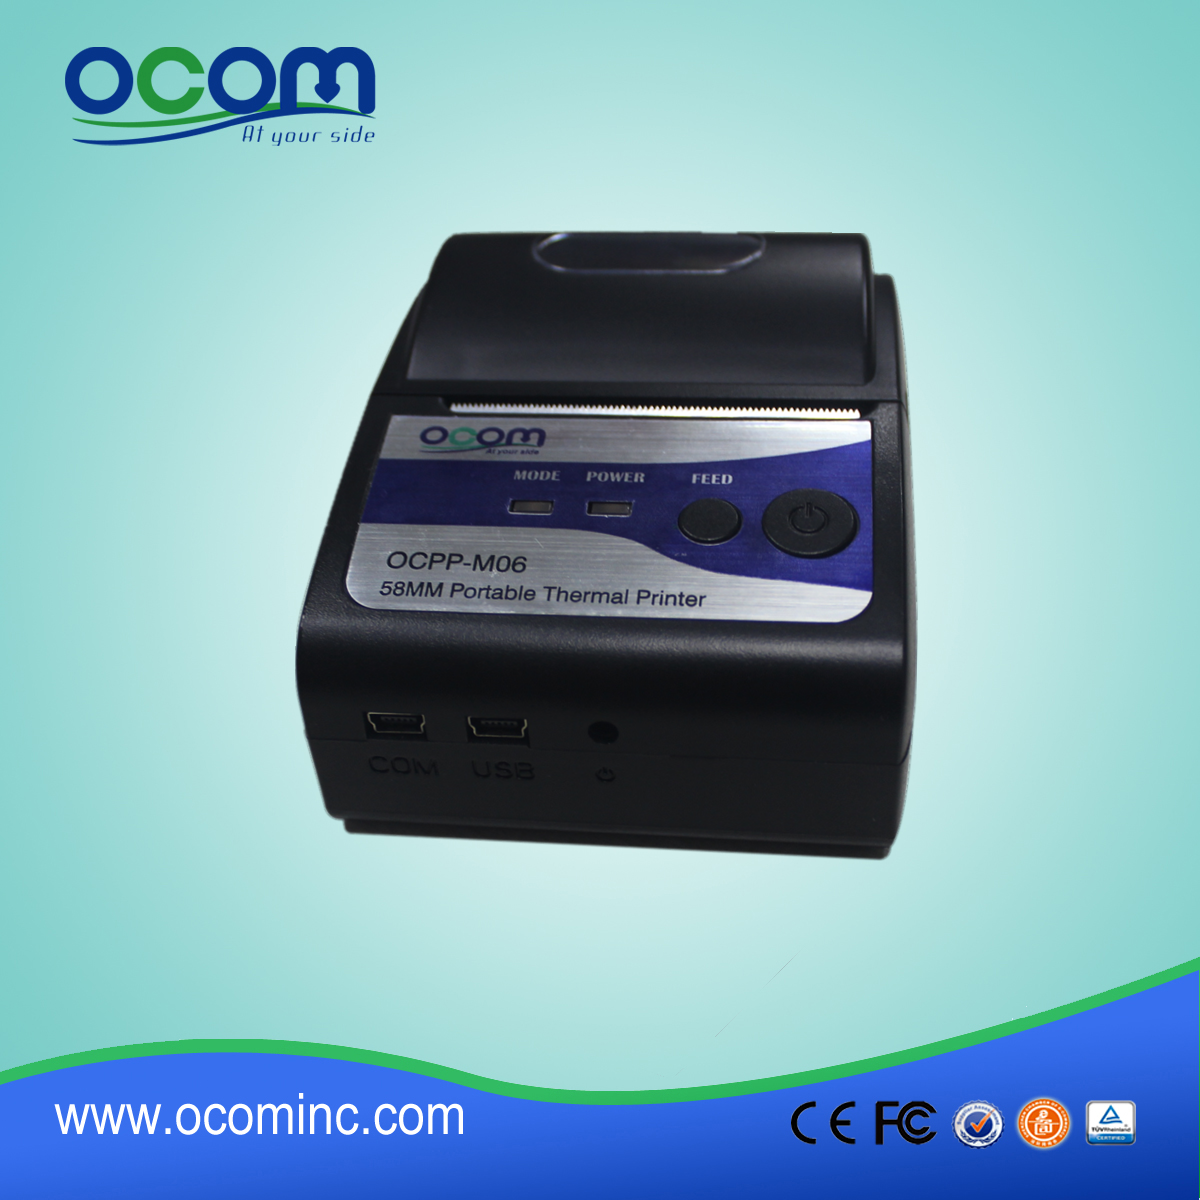 OCPP-M06 θερμικό εκτυπωτή 58 χιλιοστά φορητό απόδειξη για το Iphone